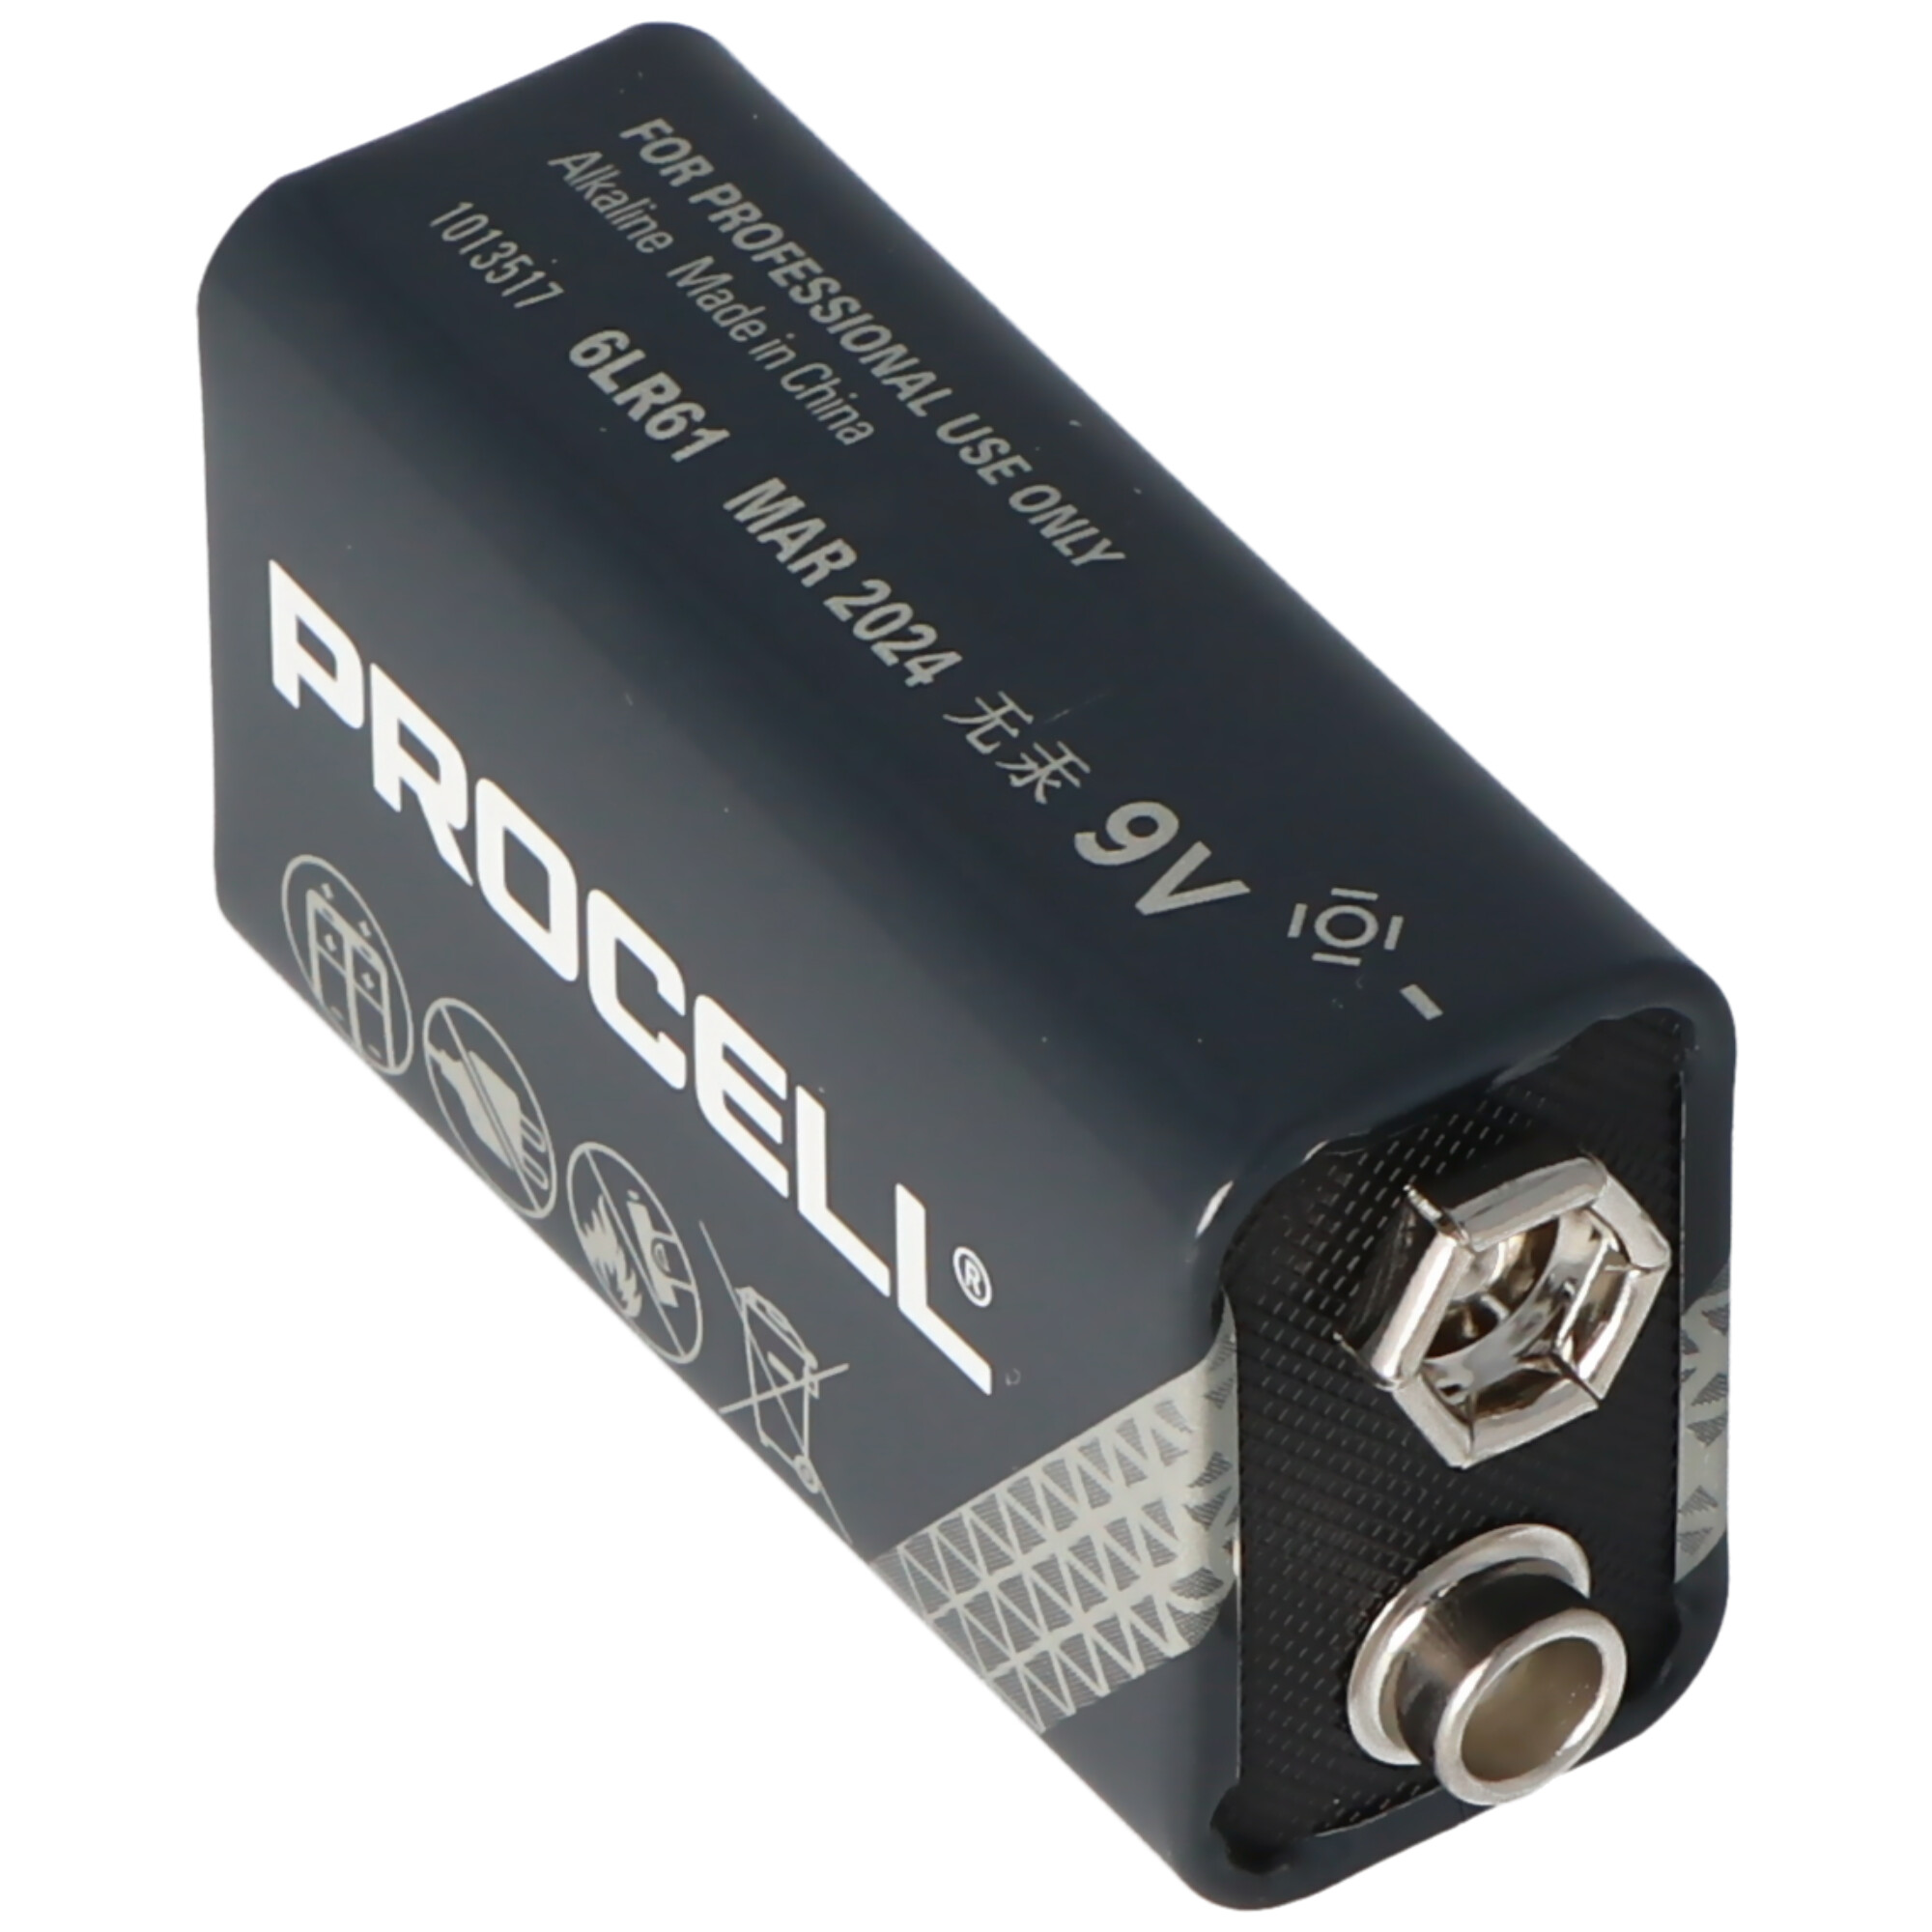 10 Stück Duracell Procell MN1604 9V-Block im Karton, Duracell Industrial MN1604